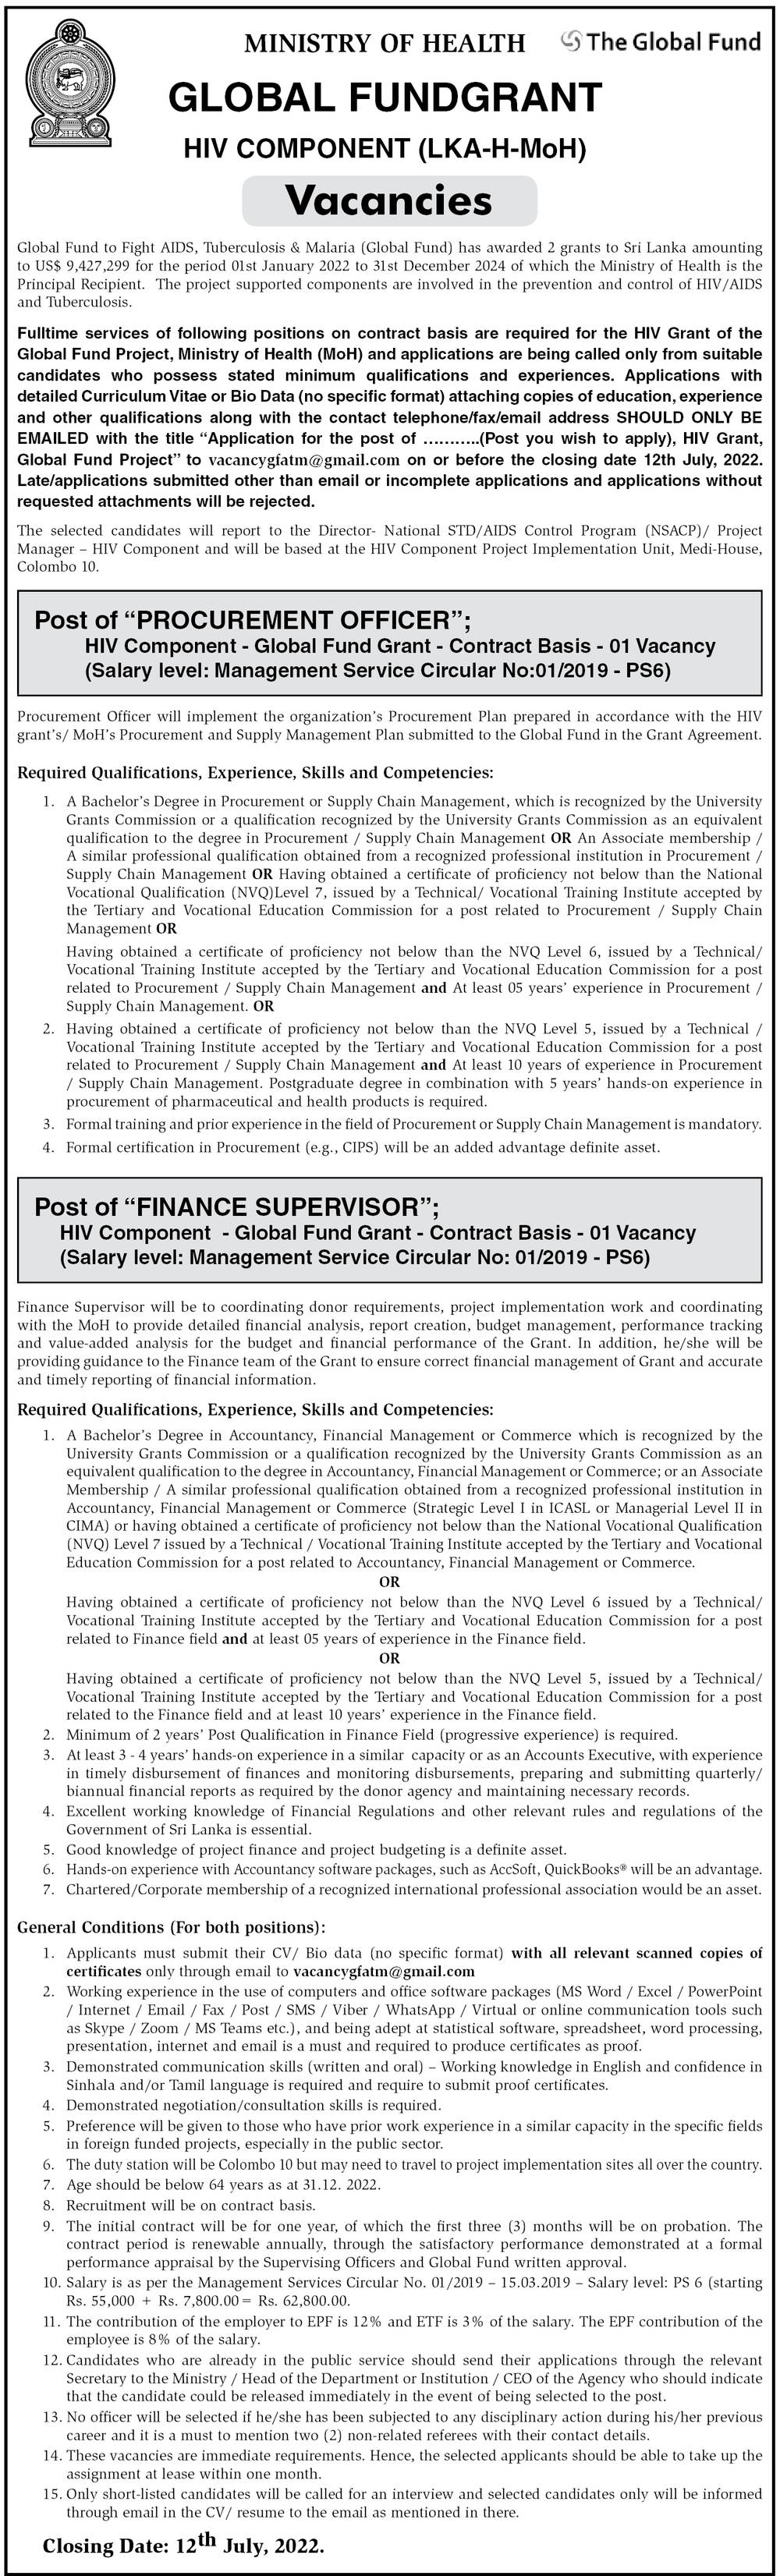 Procurement officer / Finance Supervisor - Ministry of Health Jobs Vacancies